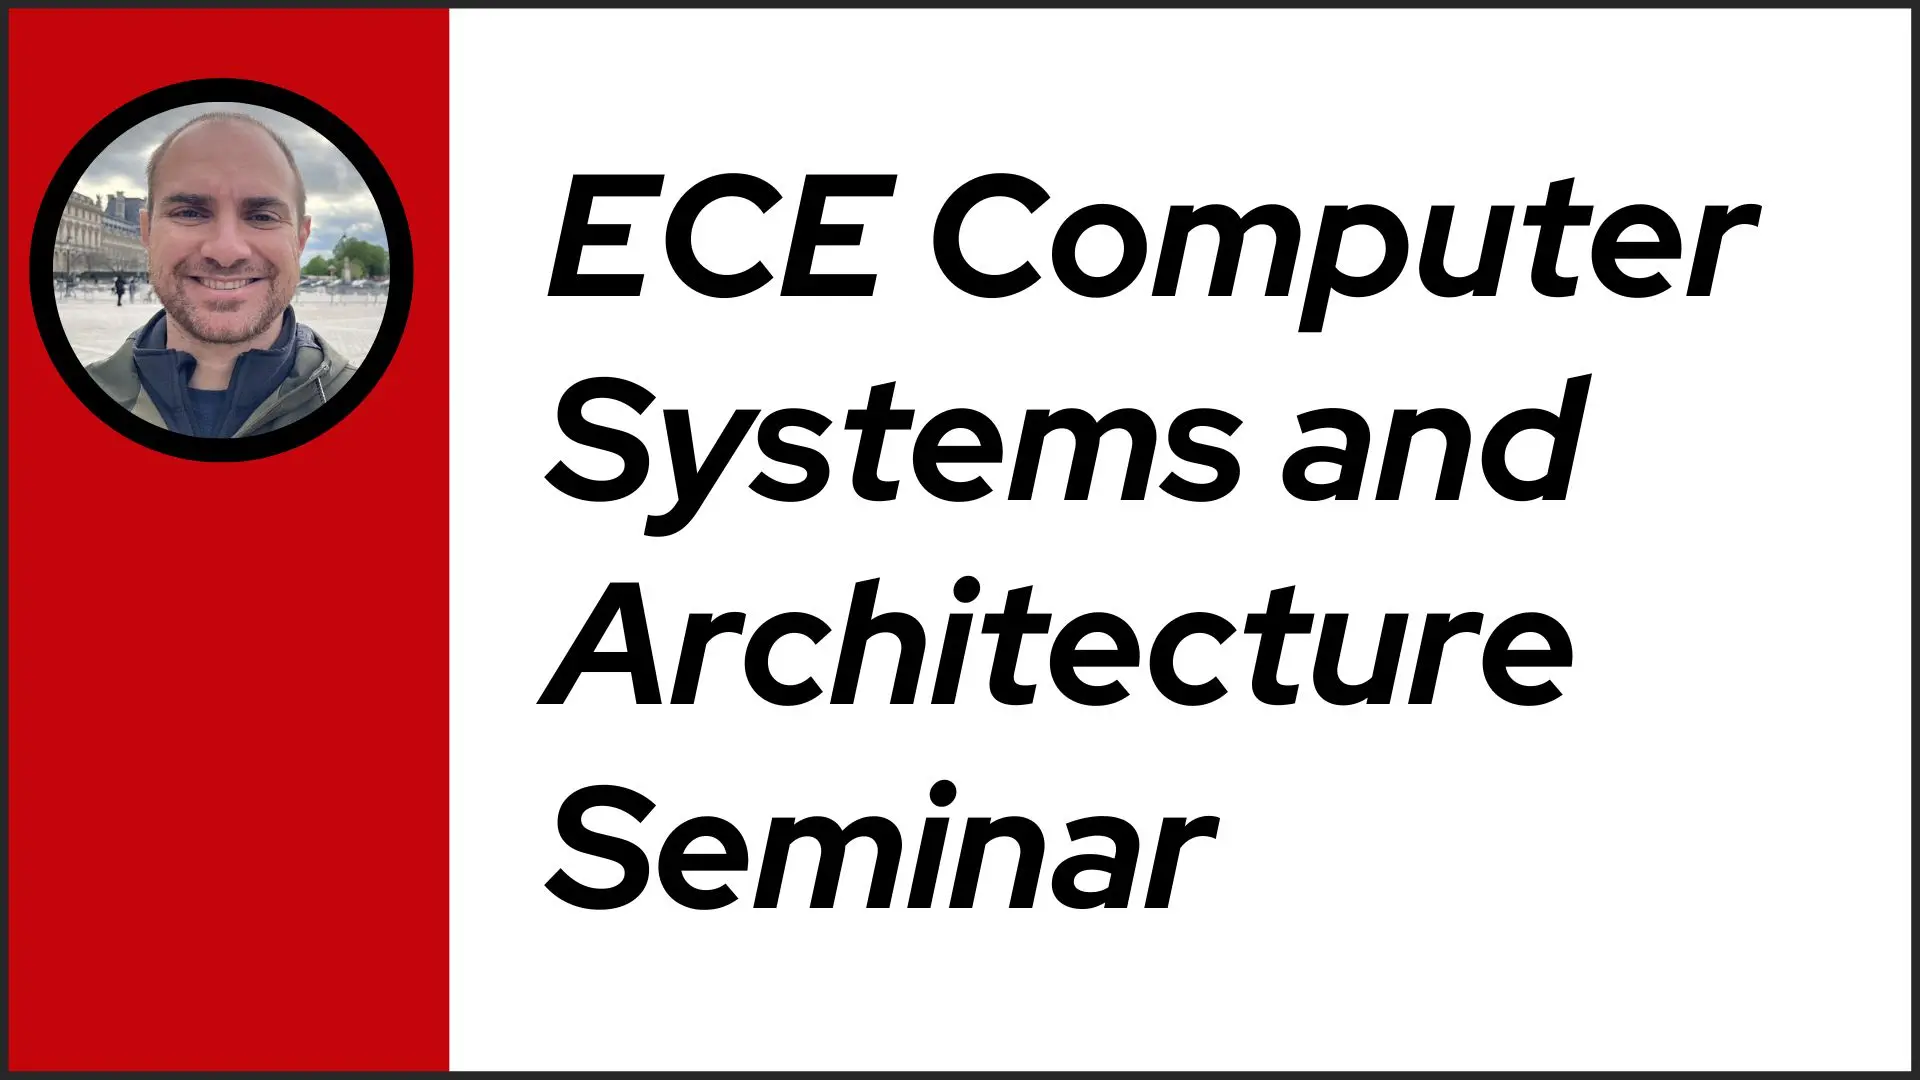 ECE Computer Systems and Architecture Seminar